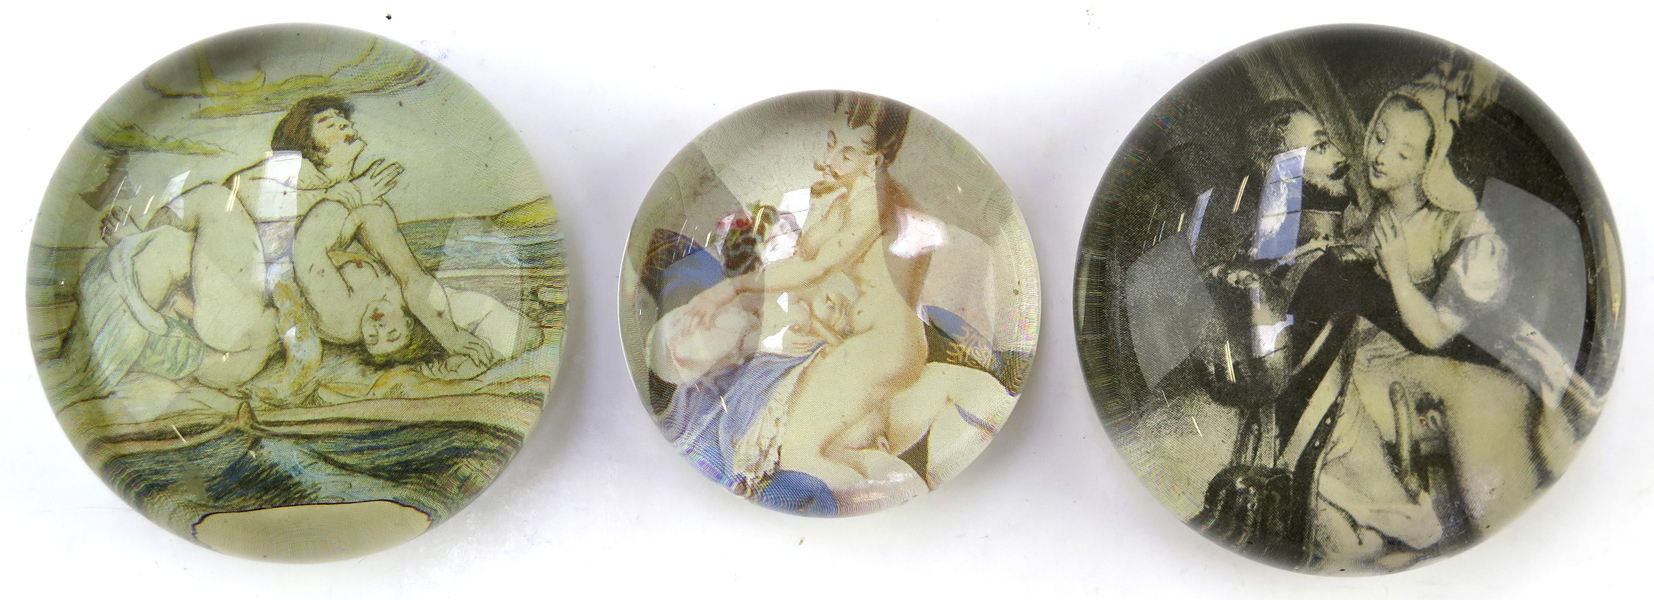 Brevvikter, glas, 3 st, offsetdekor med erotiska motiv, _18940a_8da39880d48349b_lg.jpeg